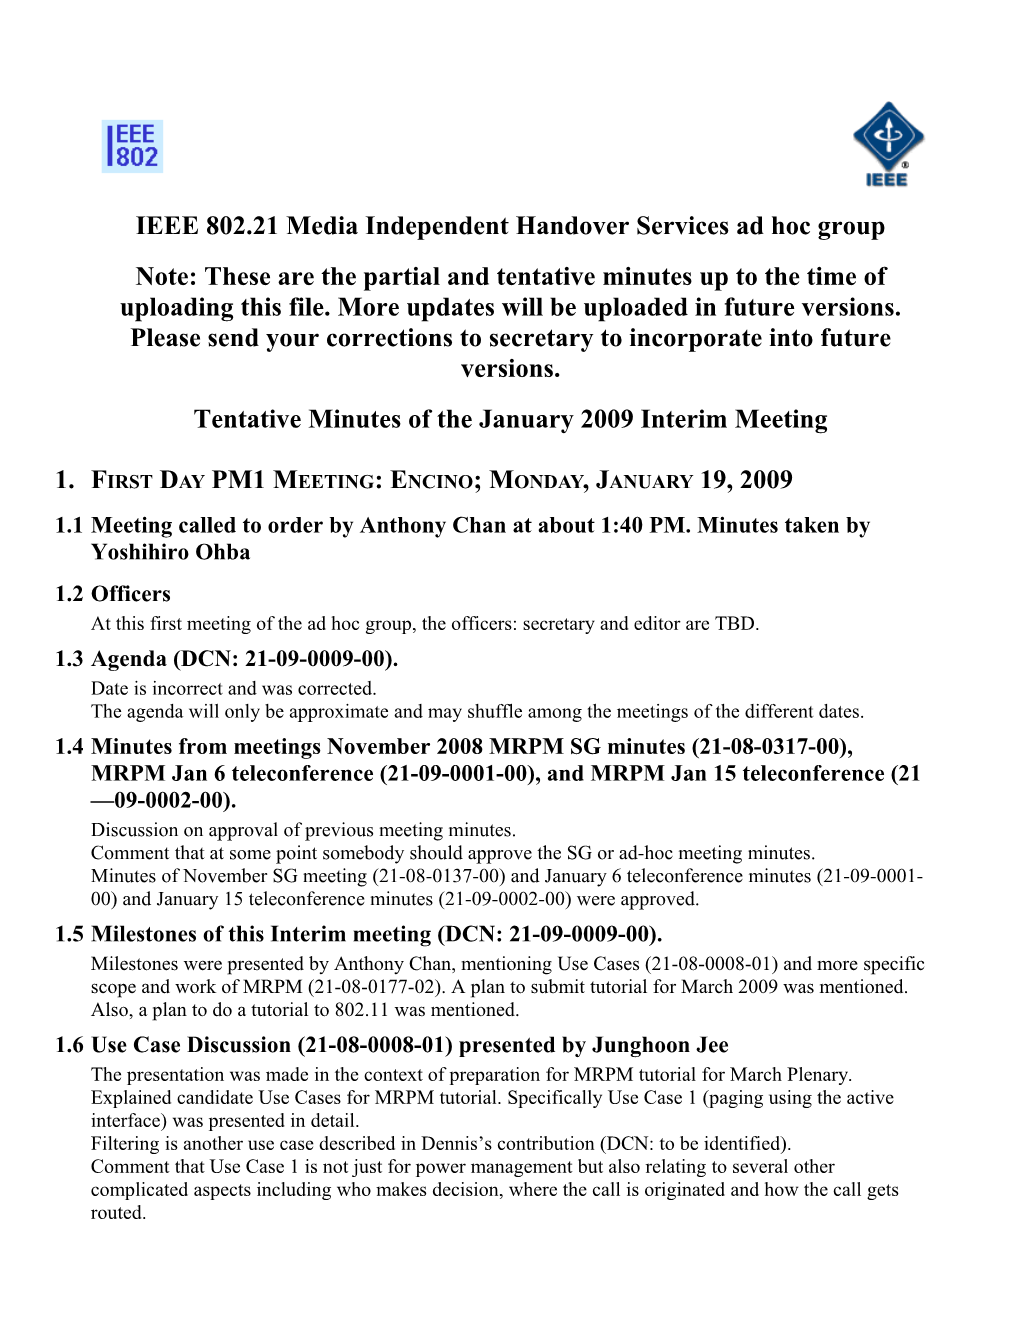 IEEE 802.21 Media Independent Handover Services Ad Hoc Group